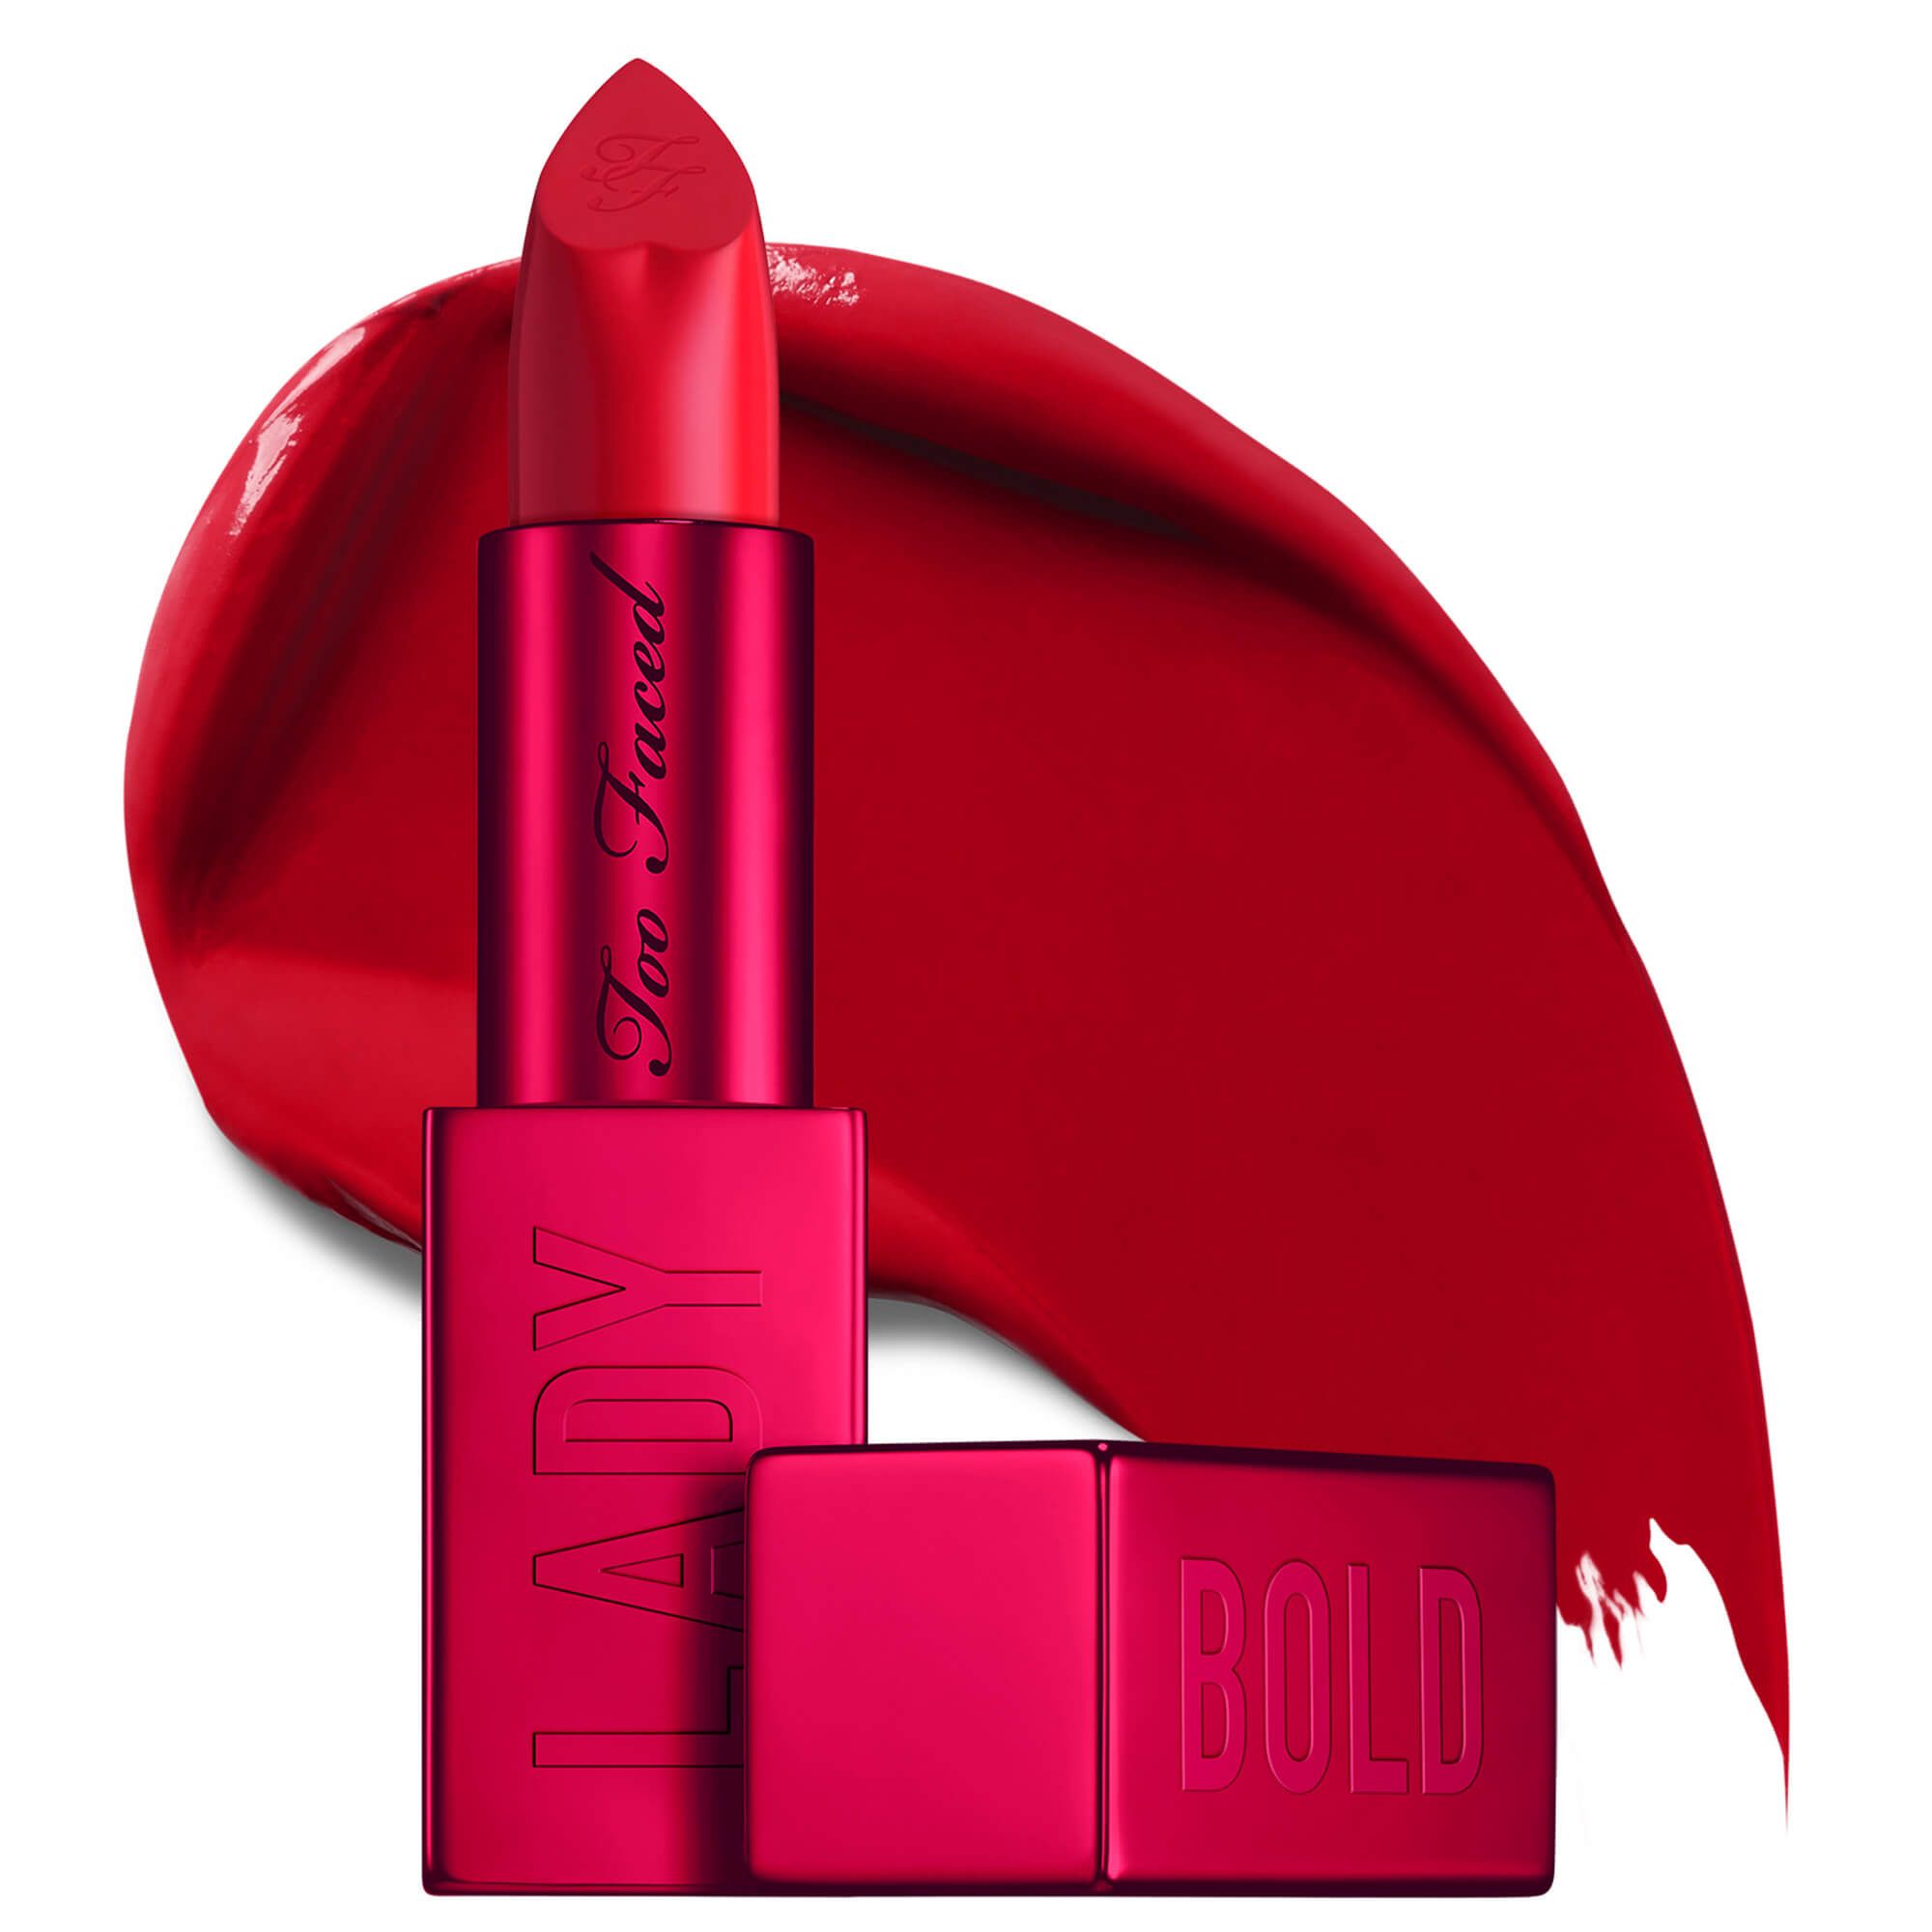 Lady Bold Cream Lipstick | TooFaced | Too Faced US